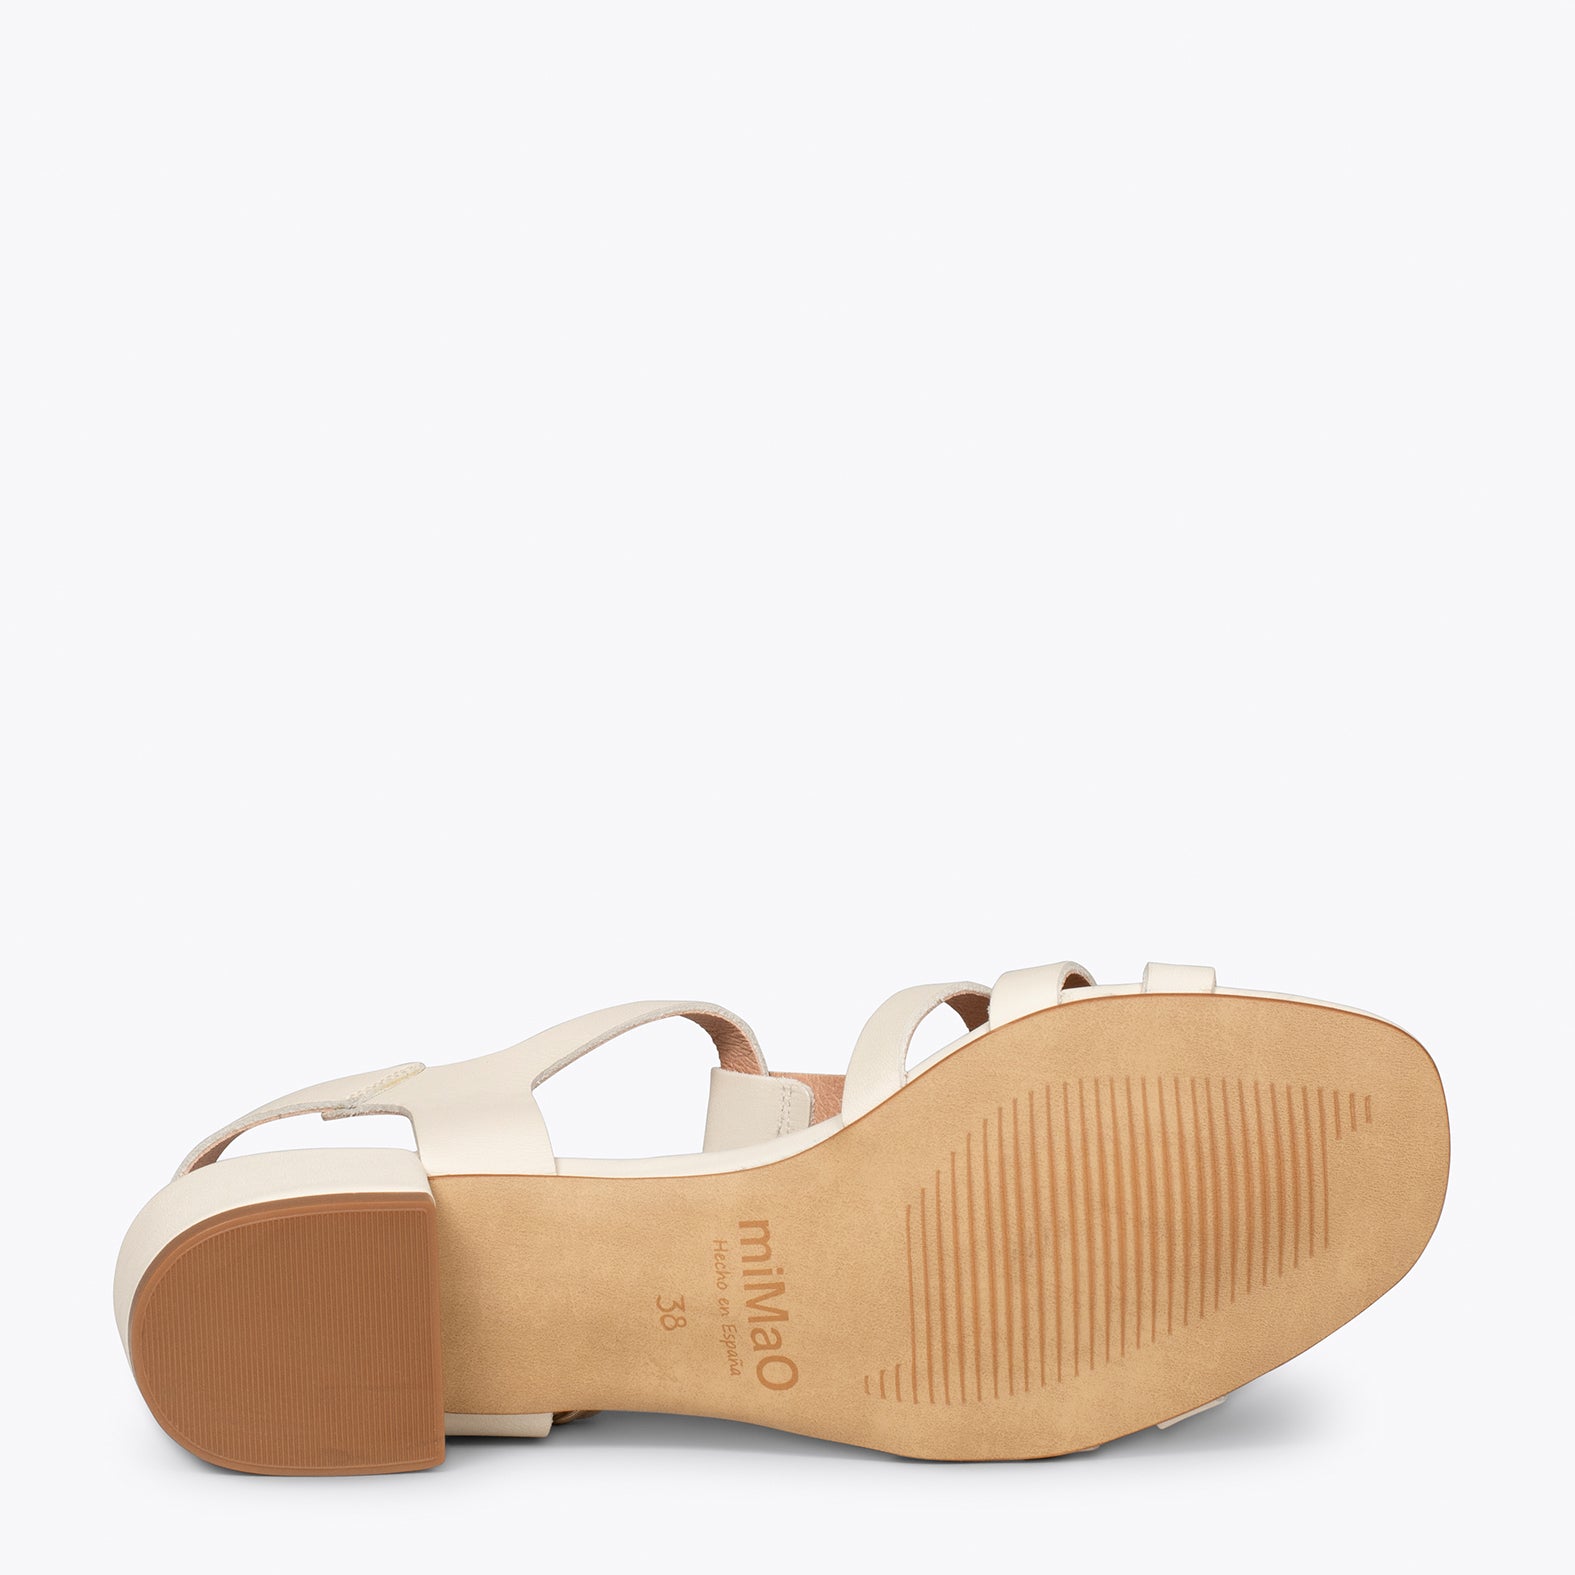 SOPHIE – WHITE low heeled sandal